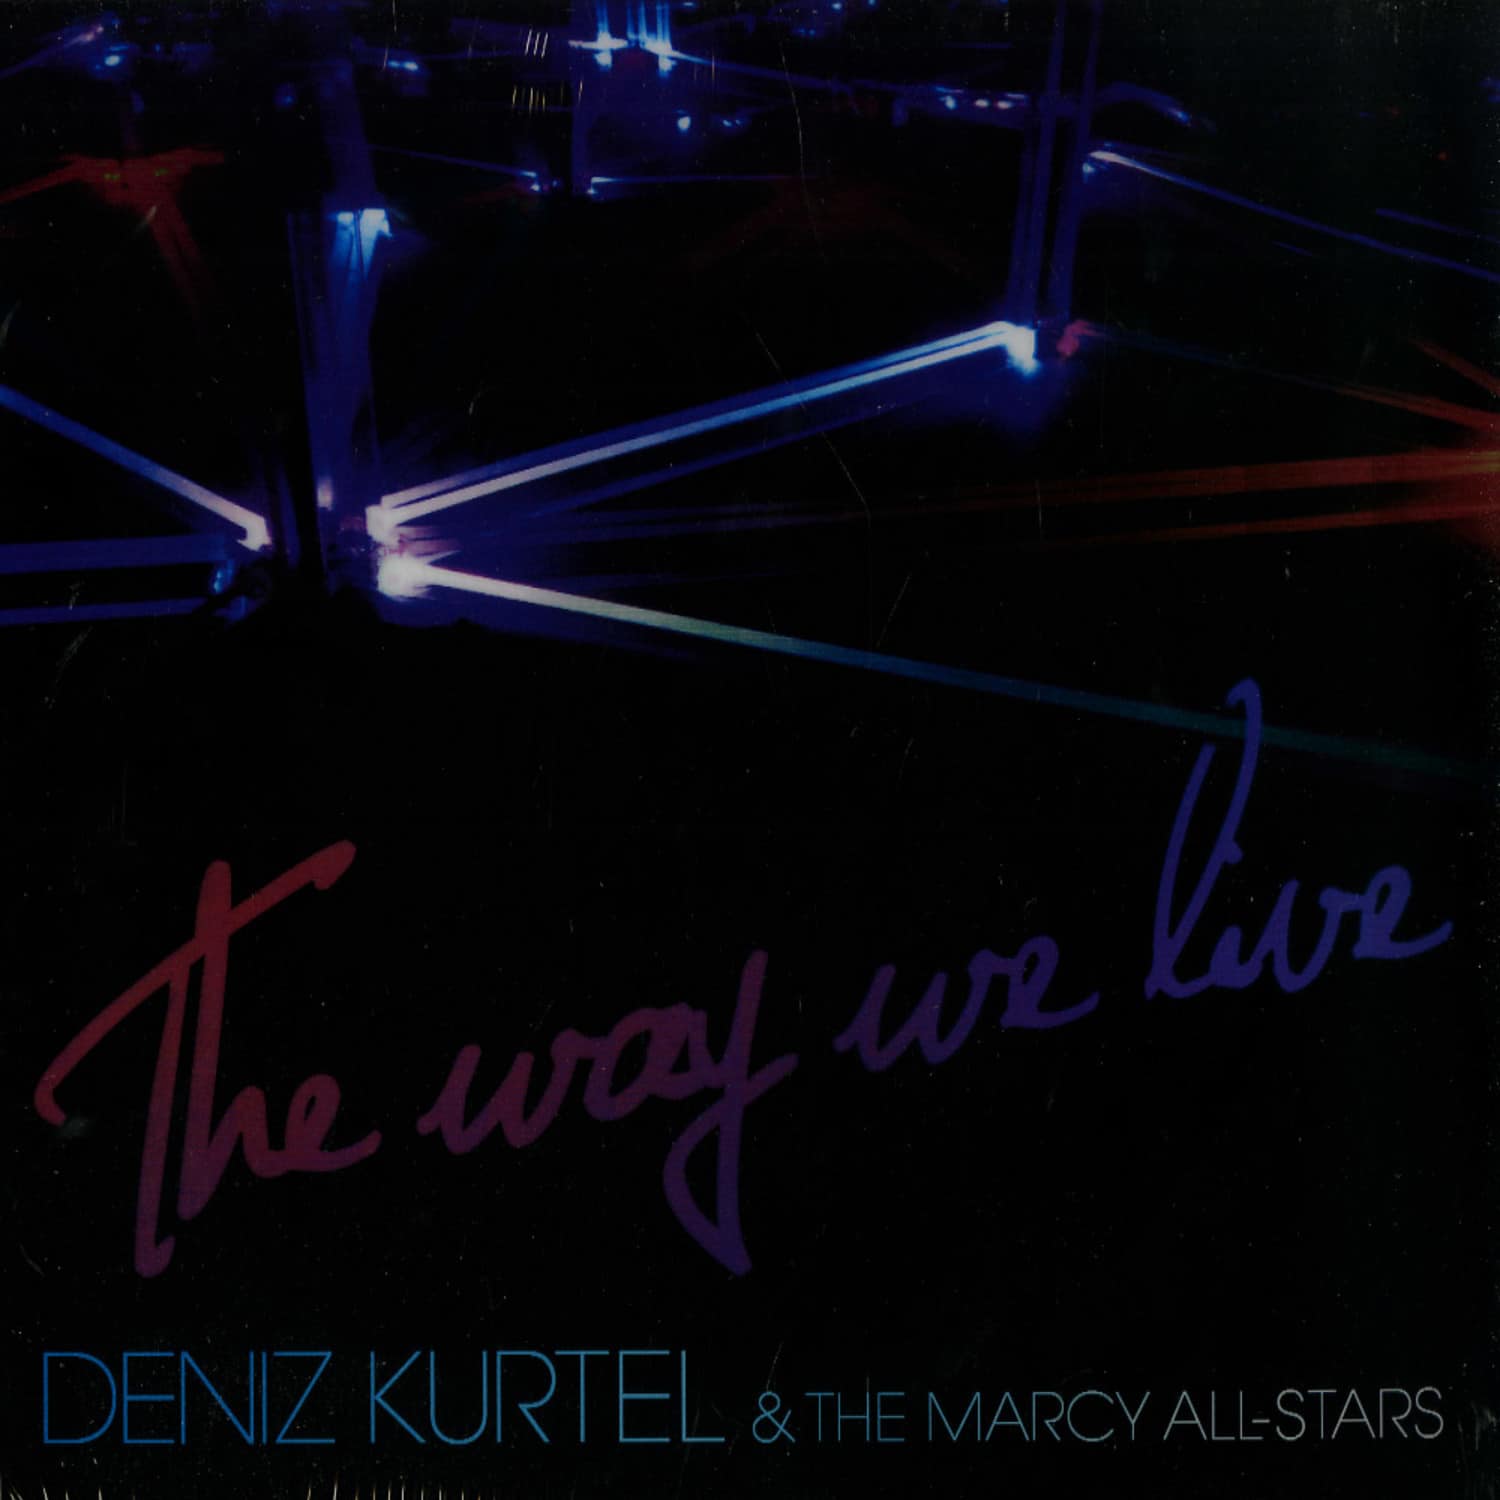 Deniz Kurtel & The Marcy All-stars - THE WAY WE LIVE 